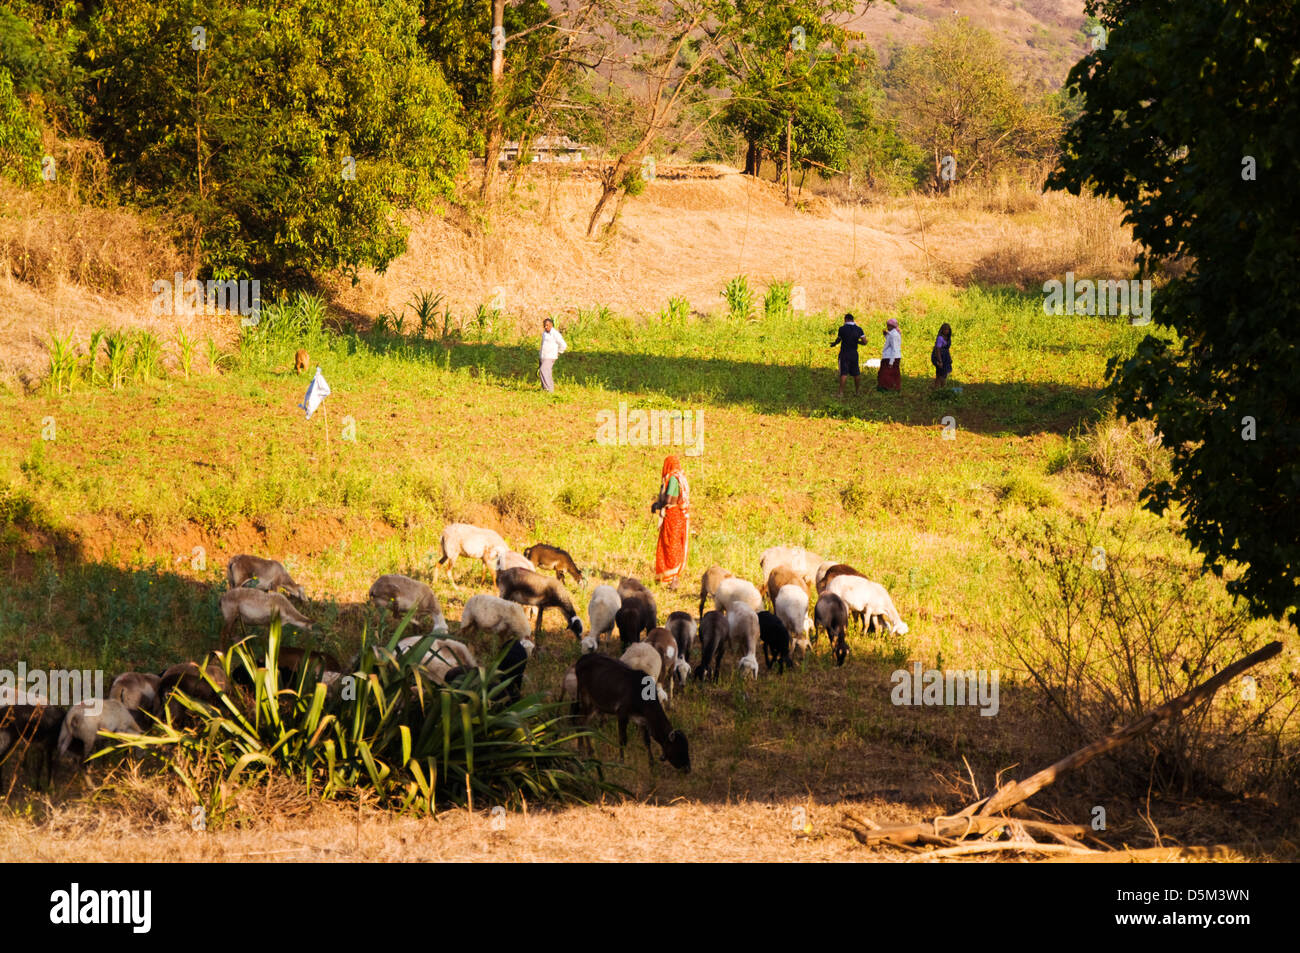 Indiana rurale comunità agricole nel villaggio Khubalivali Mulshi Valley Paud Maharashtra India Foto Stock